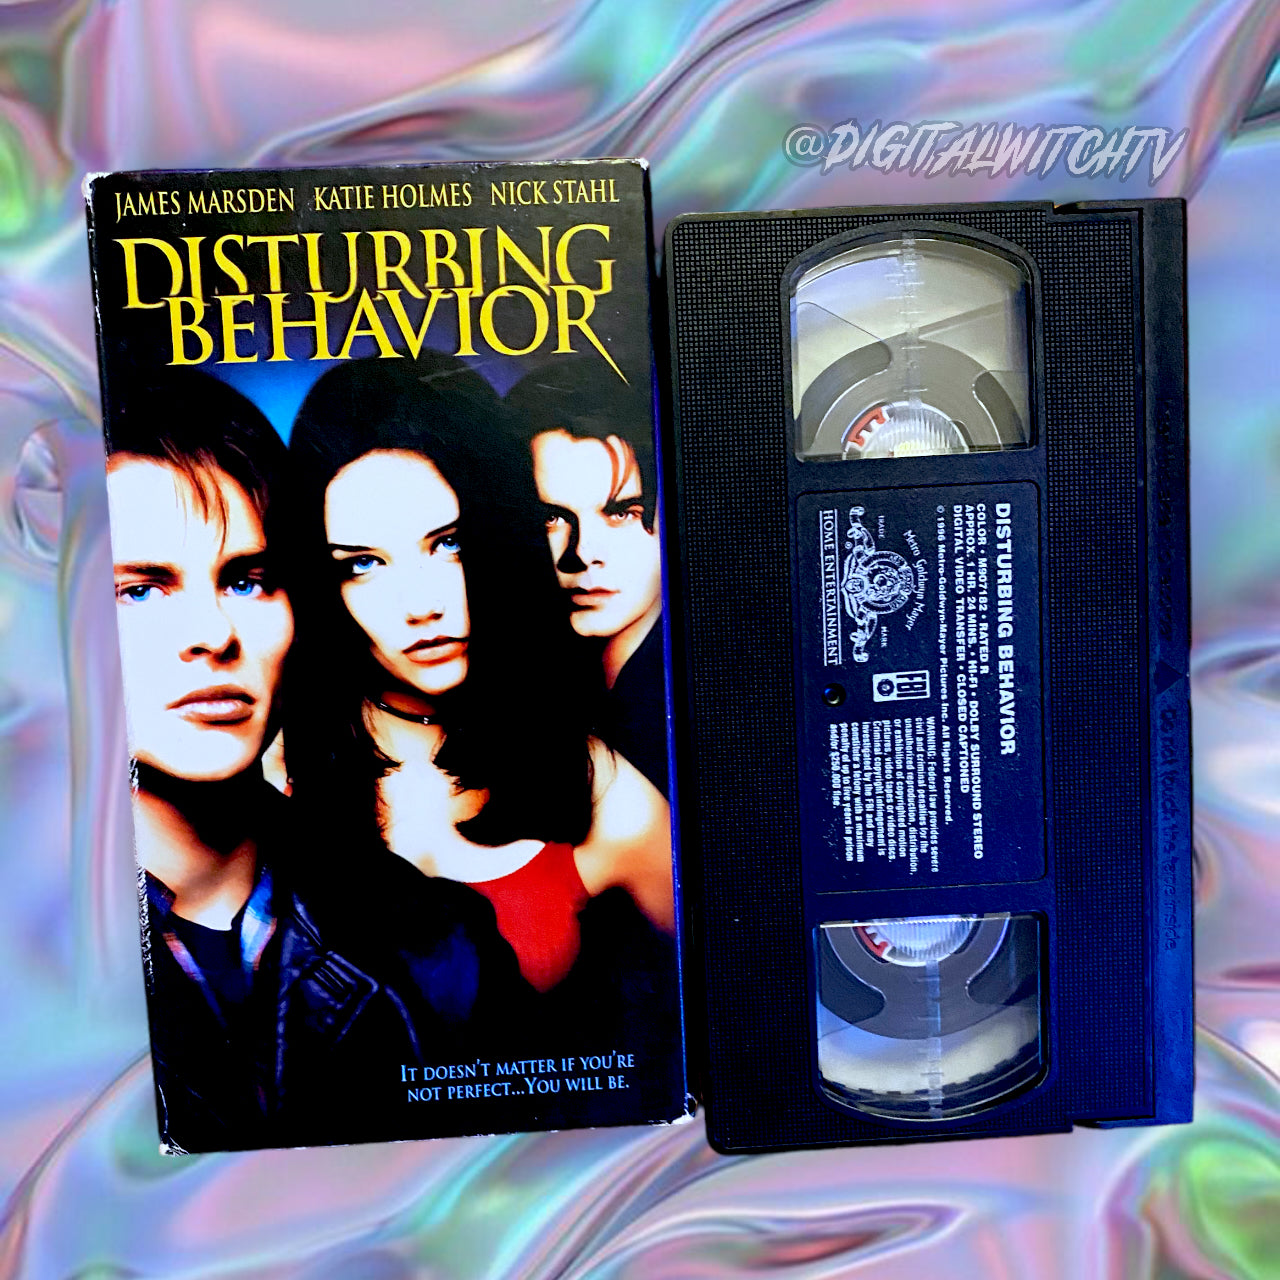 VHS - Disturbing behavior